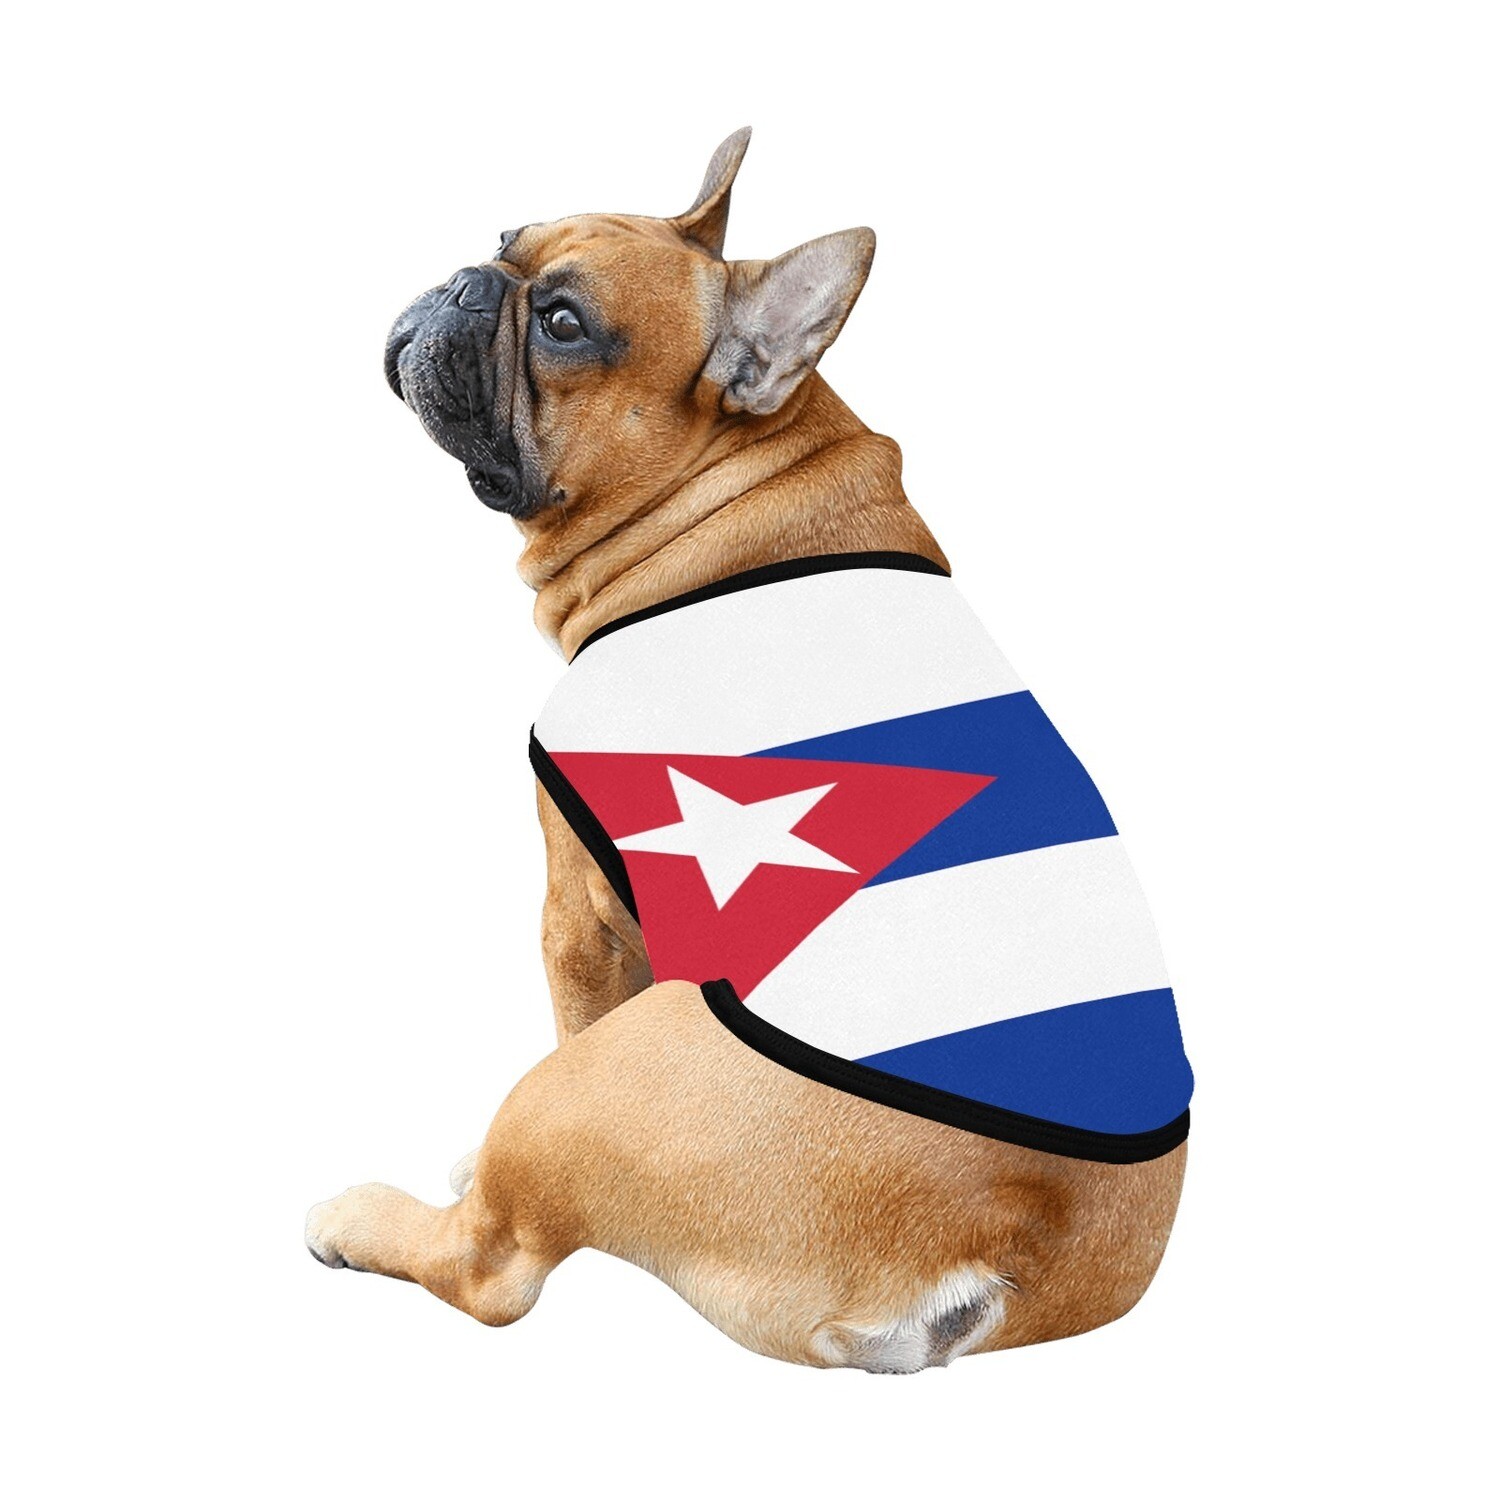 🐕🇨🇺 I love Cuba dog t-shirt, dog gift, dog tank top, dog shirt, dog clothes, gift, 7 sizes XS to 3XL, big Cuban flag